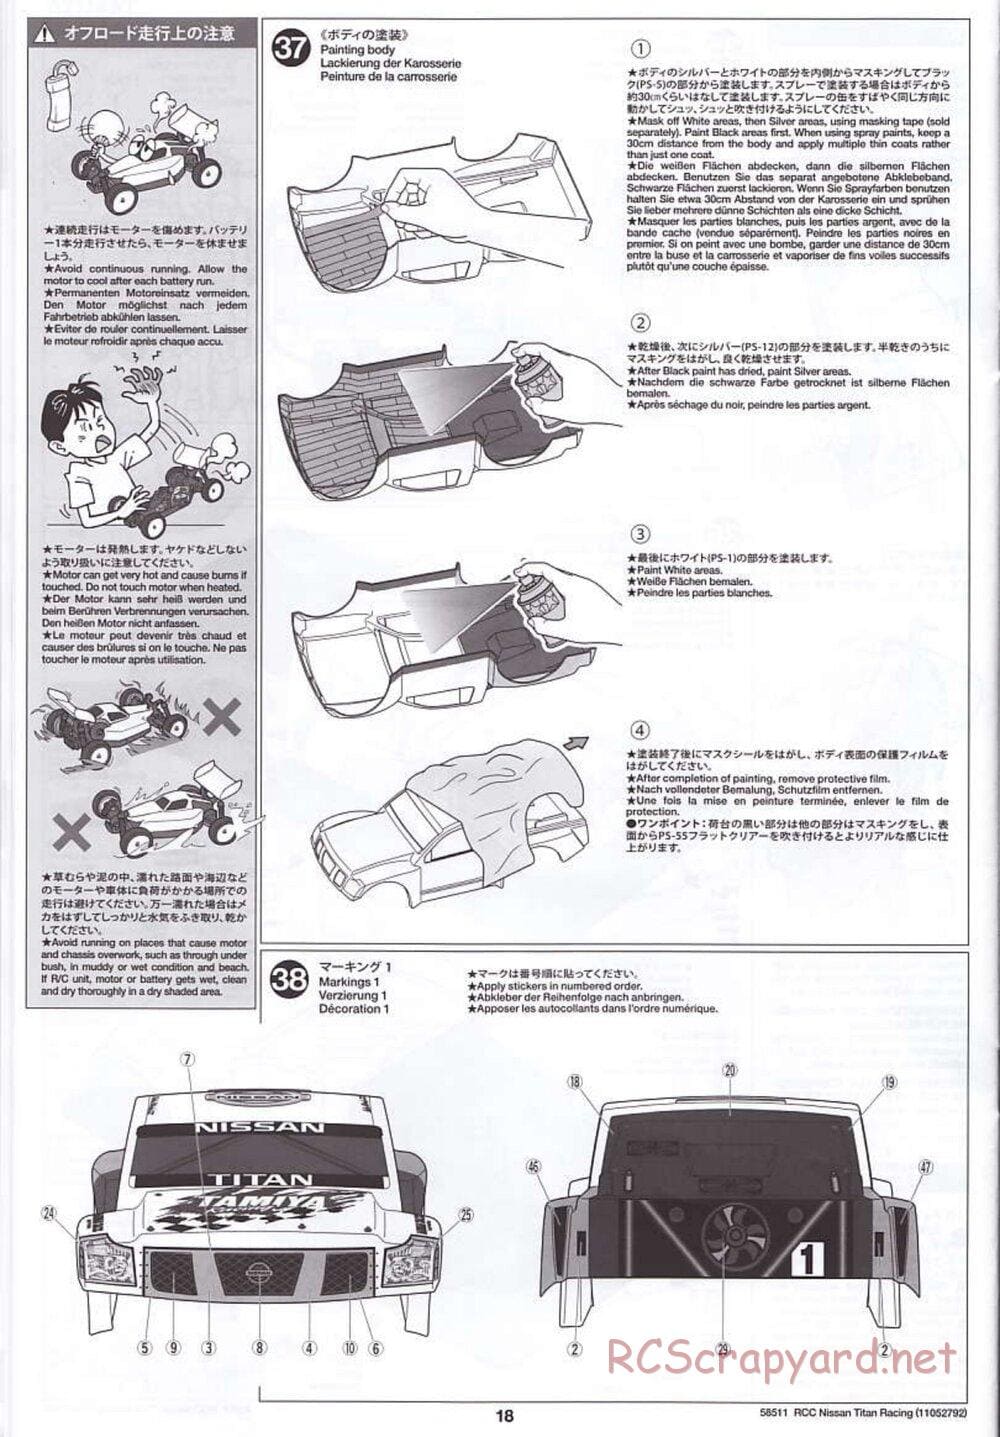 Tamiya - Nissan Titan Chassis - Manual - Page 18